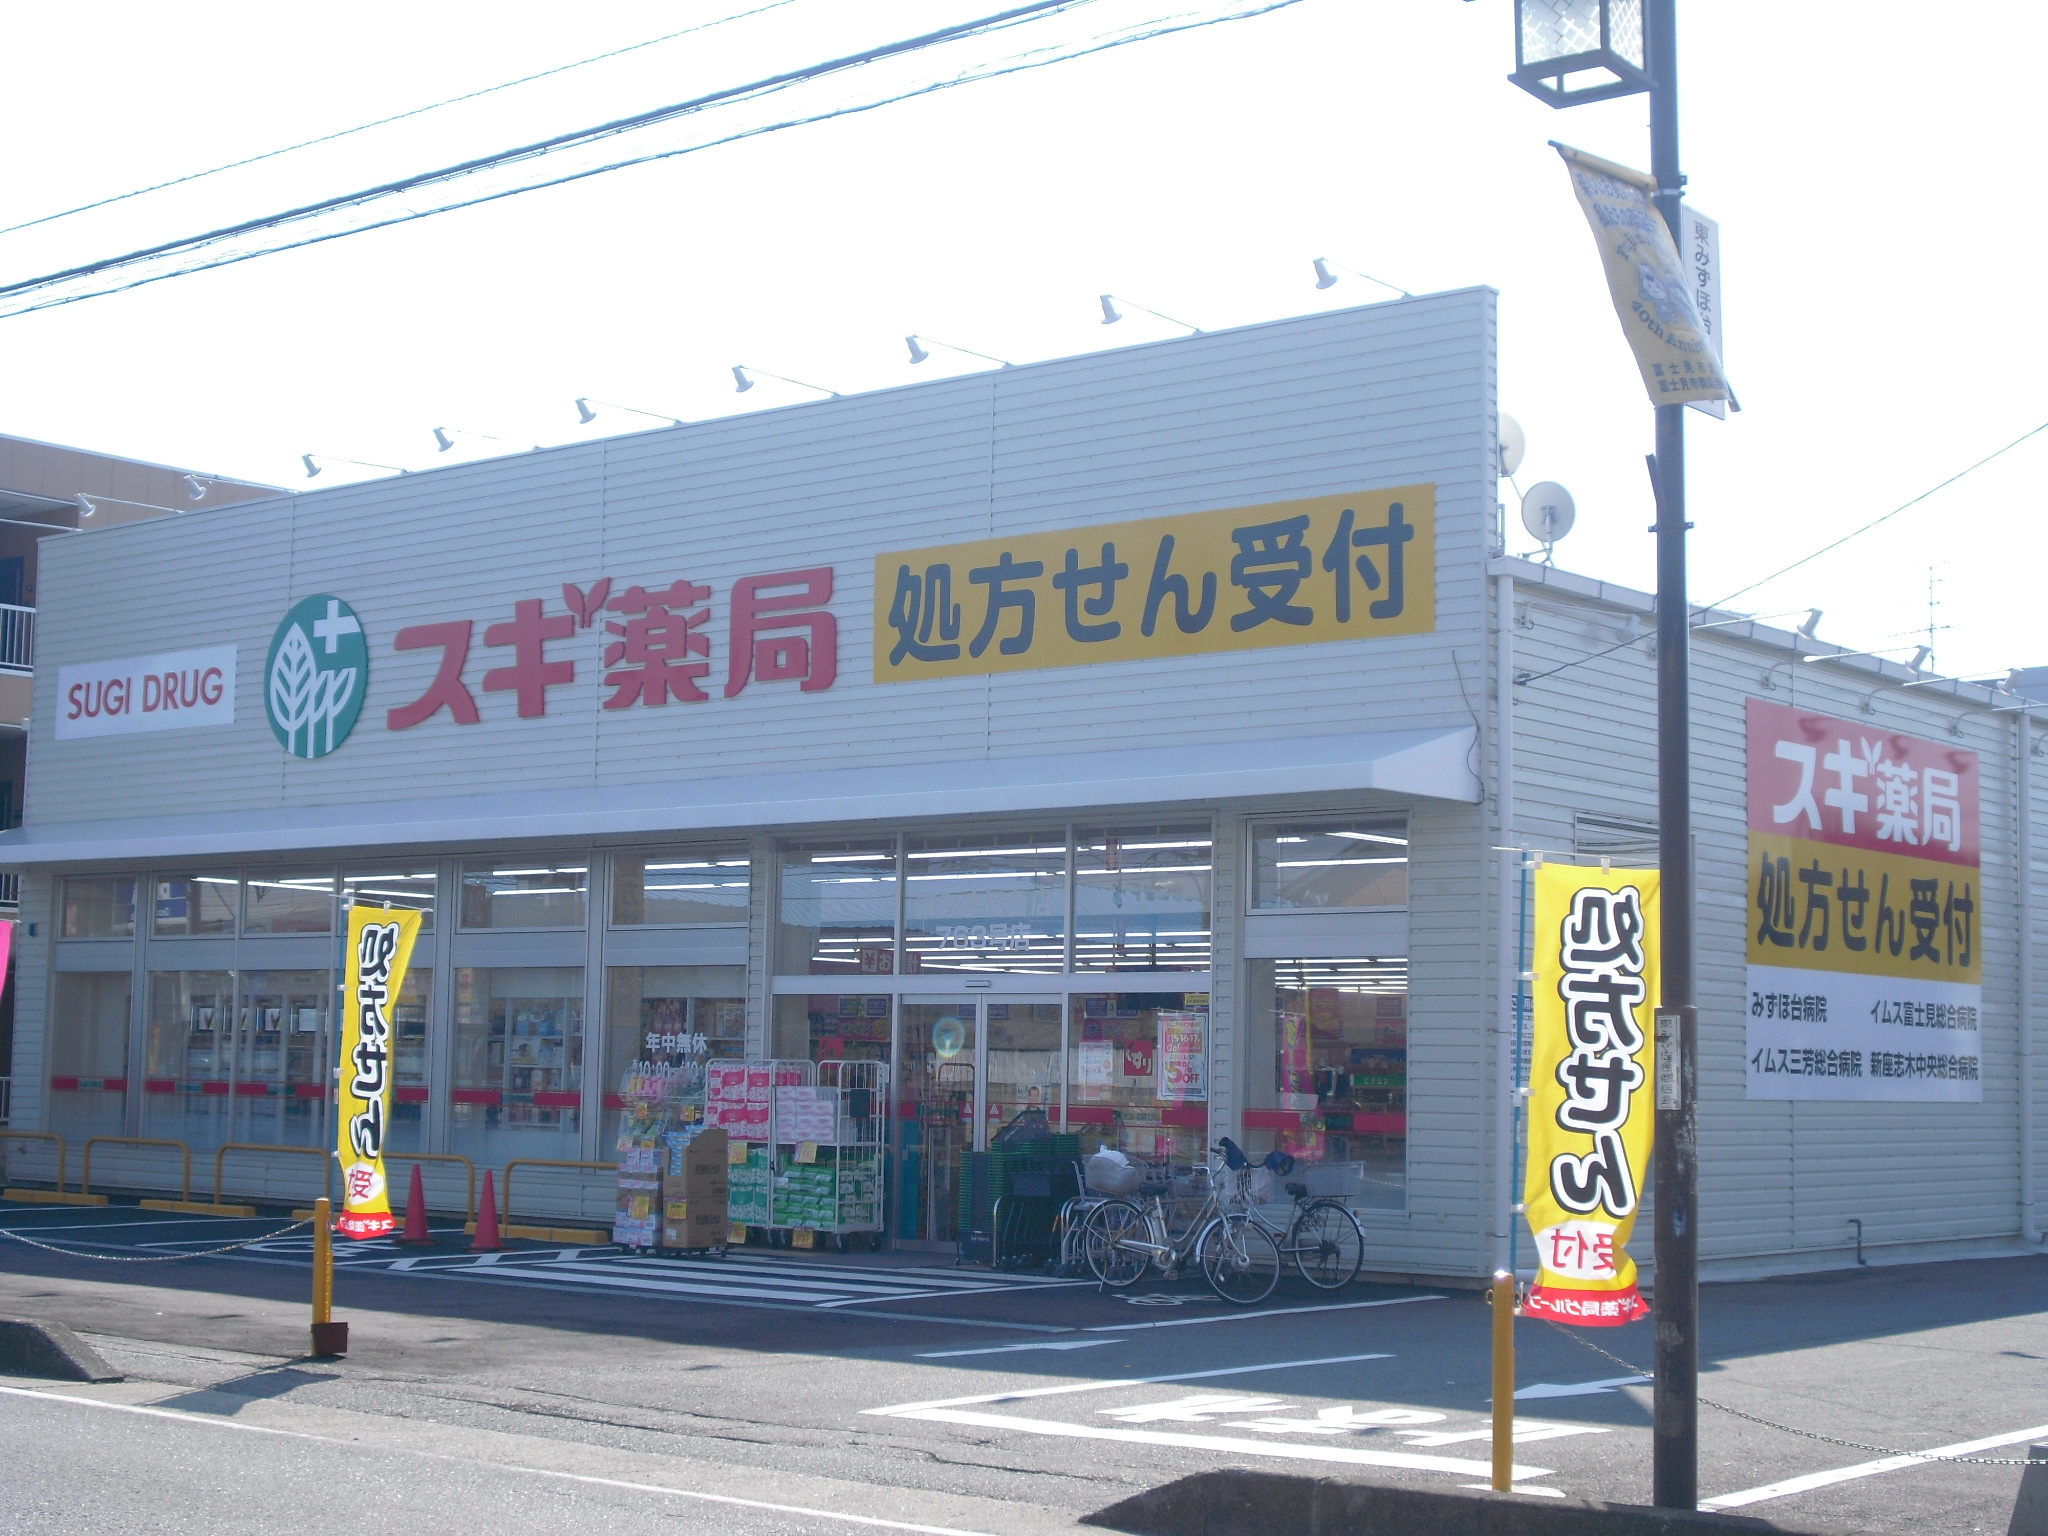 Dorakkusutoa. Cedar pharmacy Higashimizuhodai shop 529m until (drugstore)